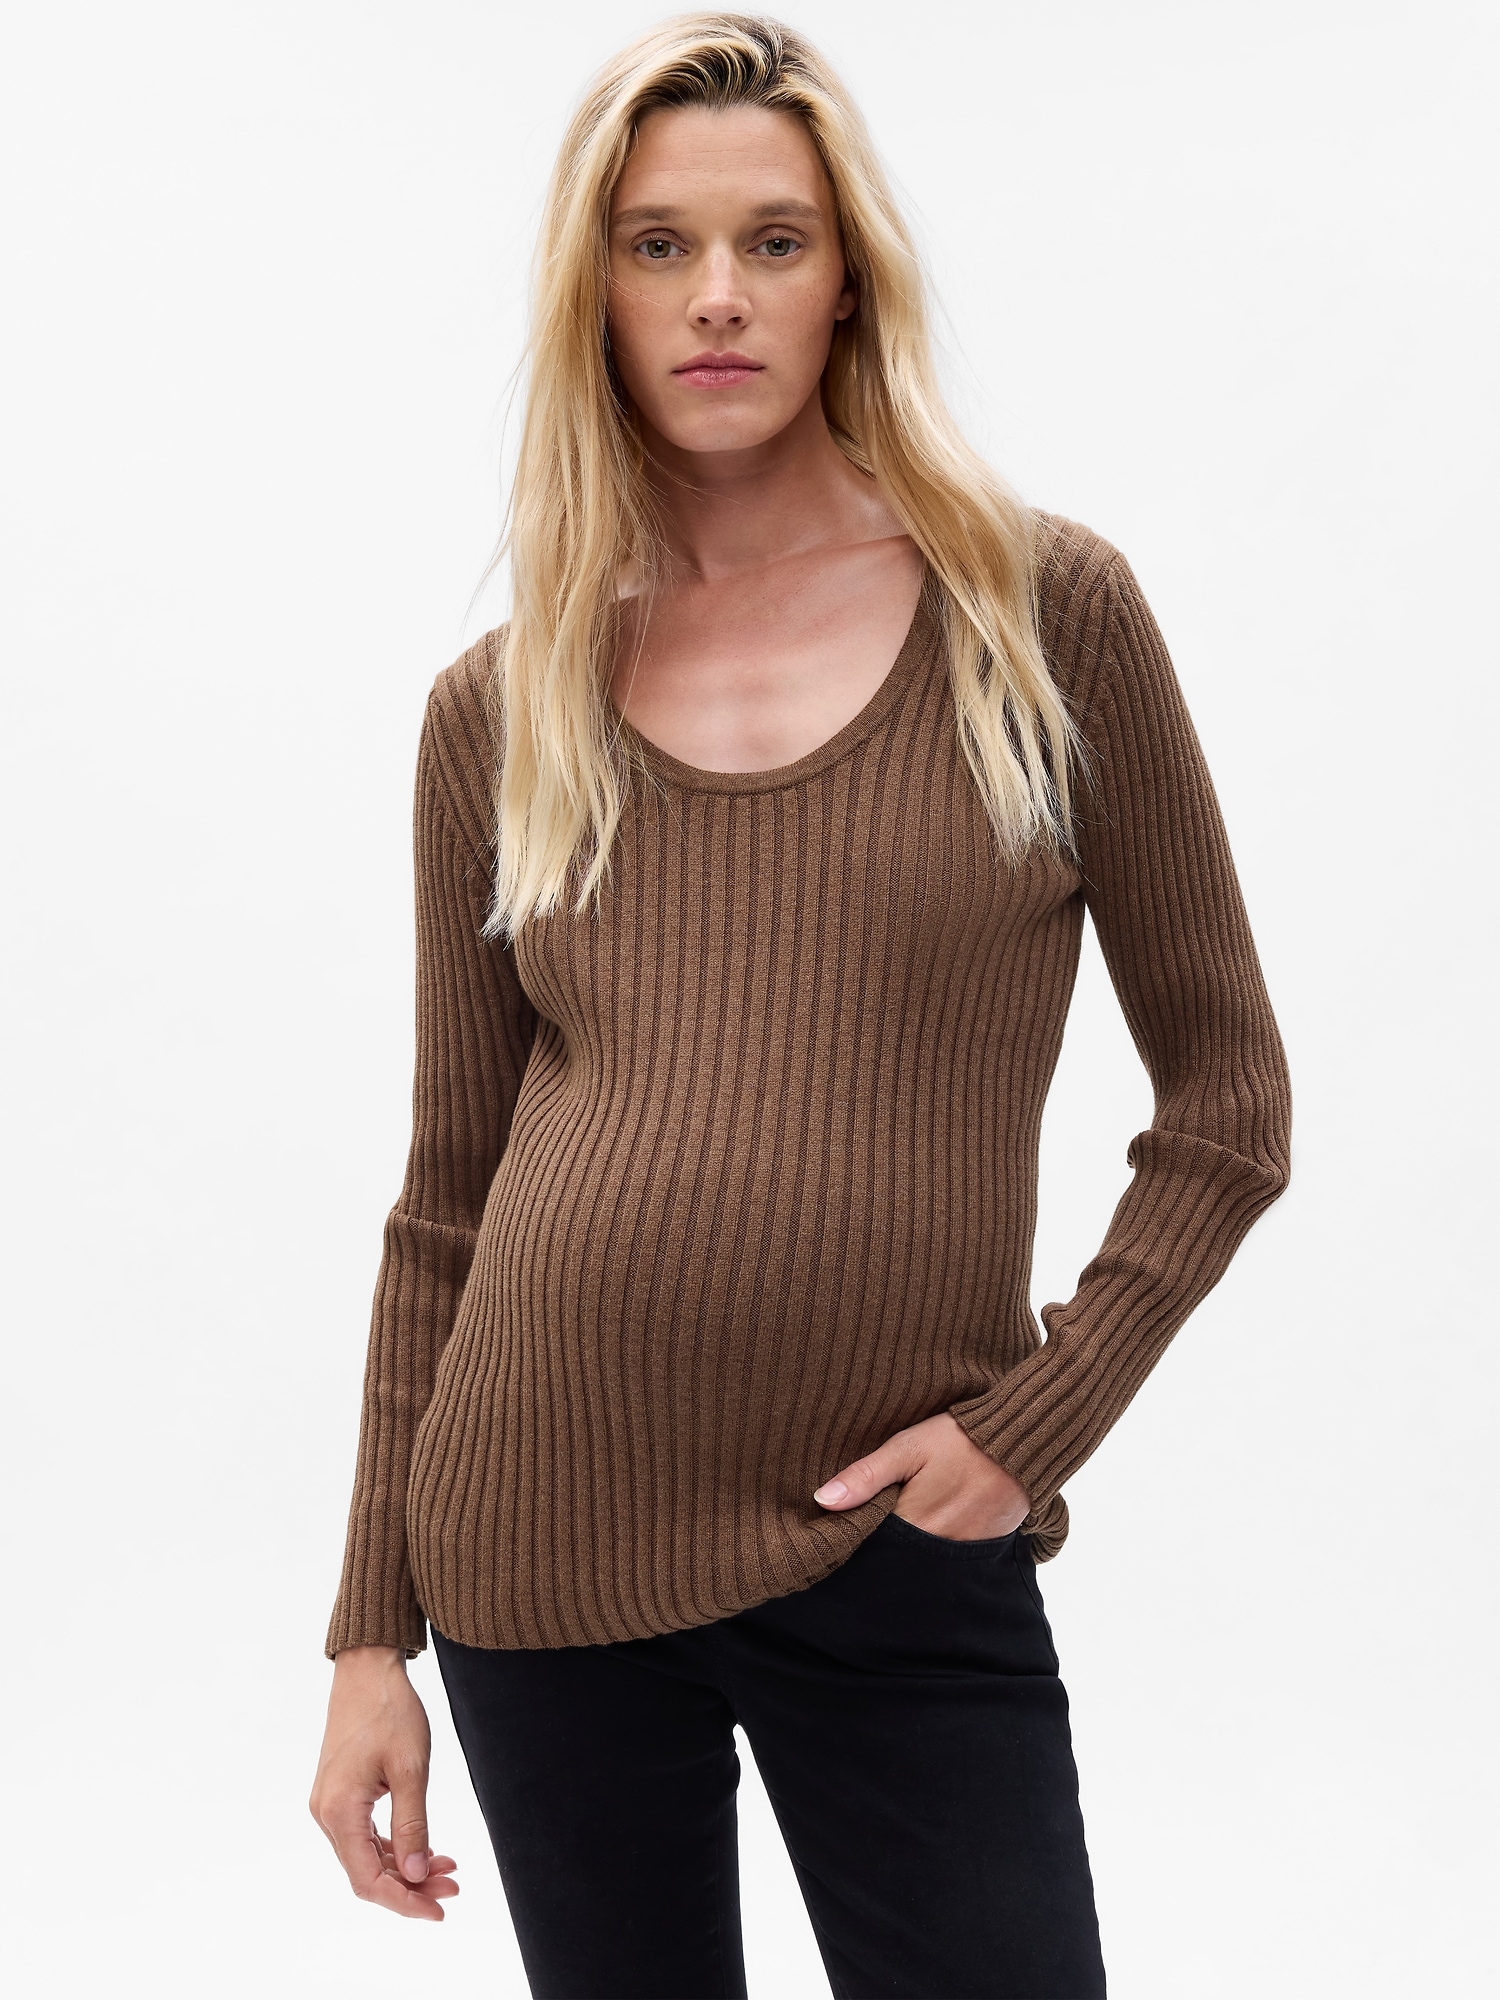 Gap Maternity Lightweight V-Neck Rib Sweater